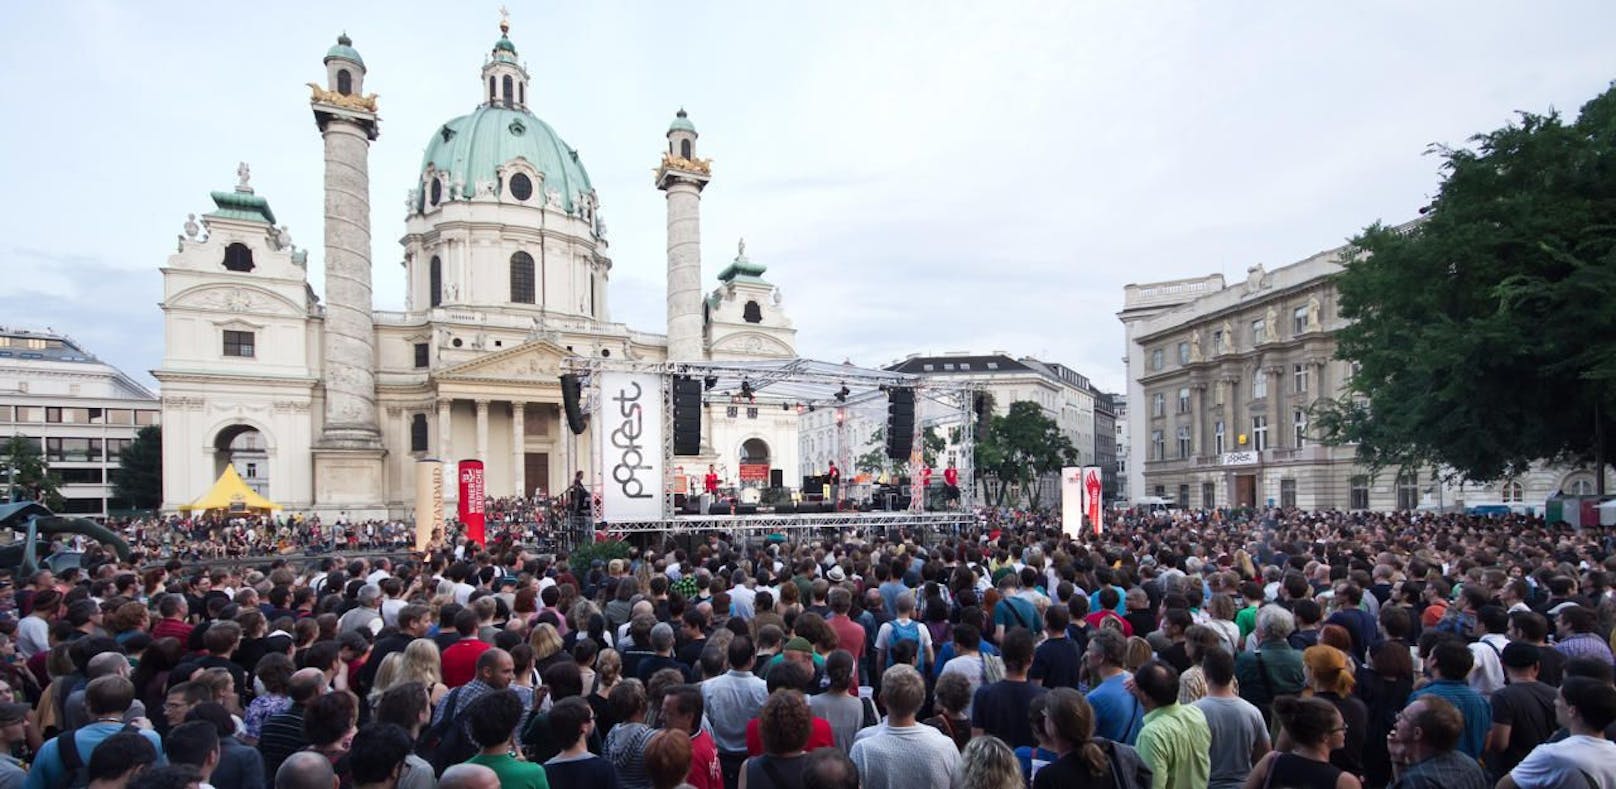 Das Popfest am Karlsplatz (Bild: Simon Brugner/theyshootmusic.com)